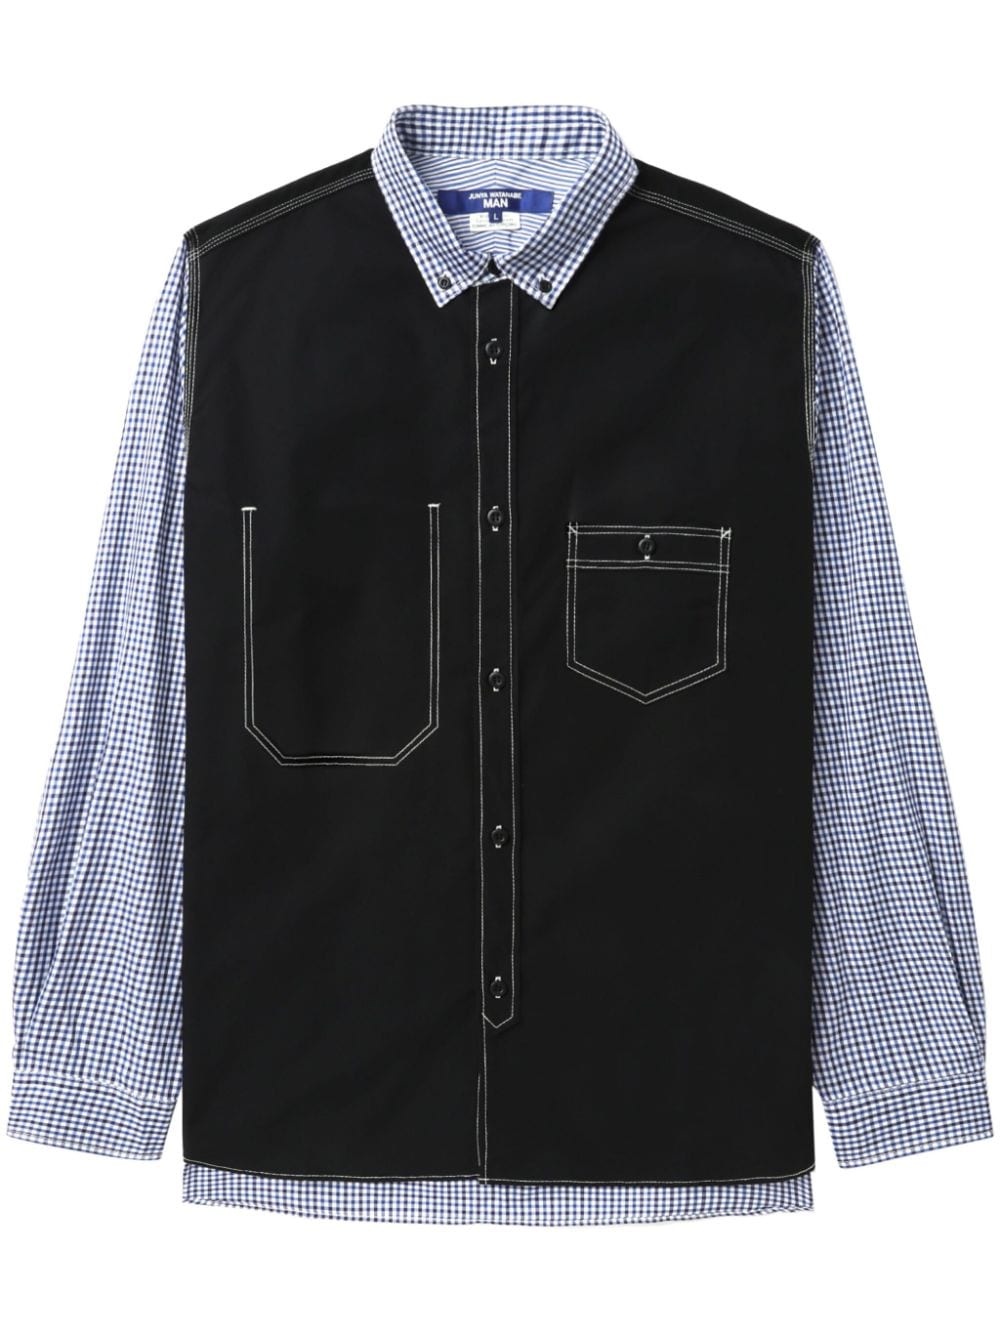 Junya Watanabe MAN patchwork striped cotton shirt - Black